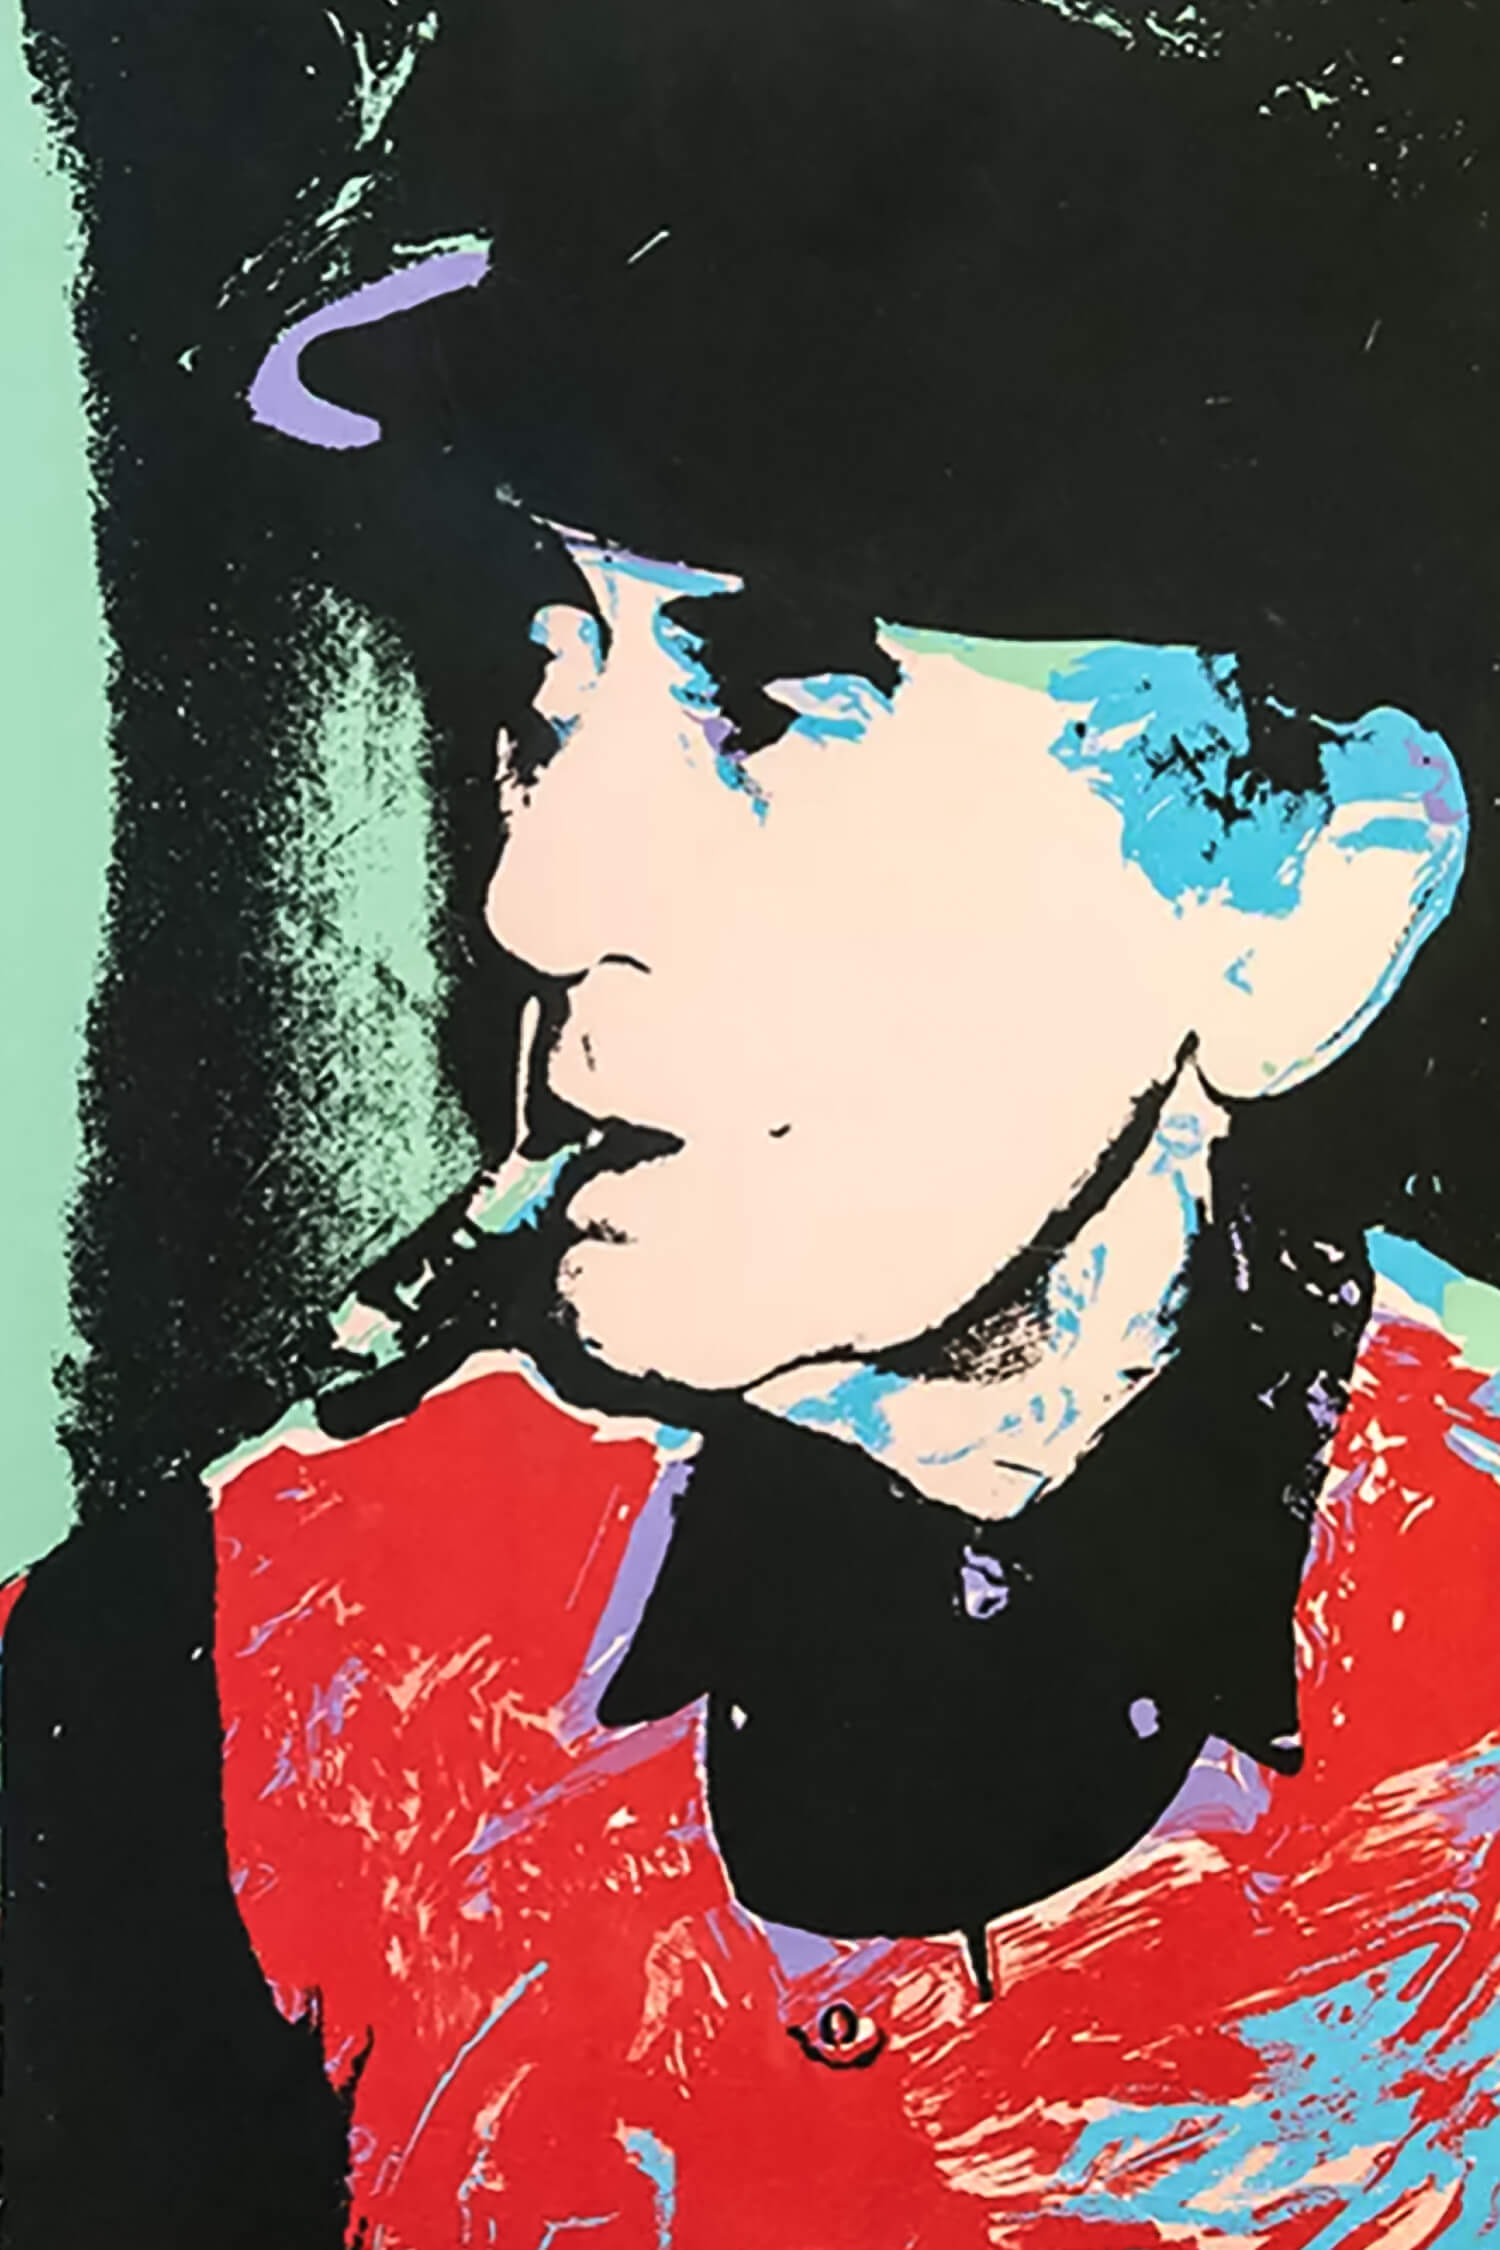 Andy Warhol | Man Ray 1974